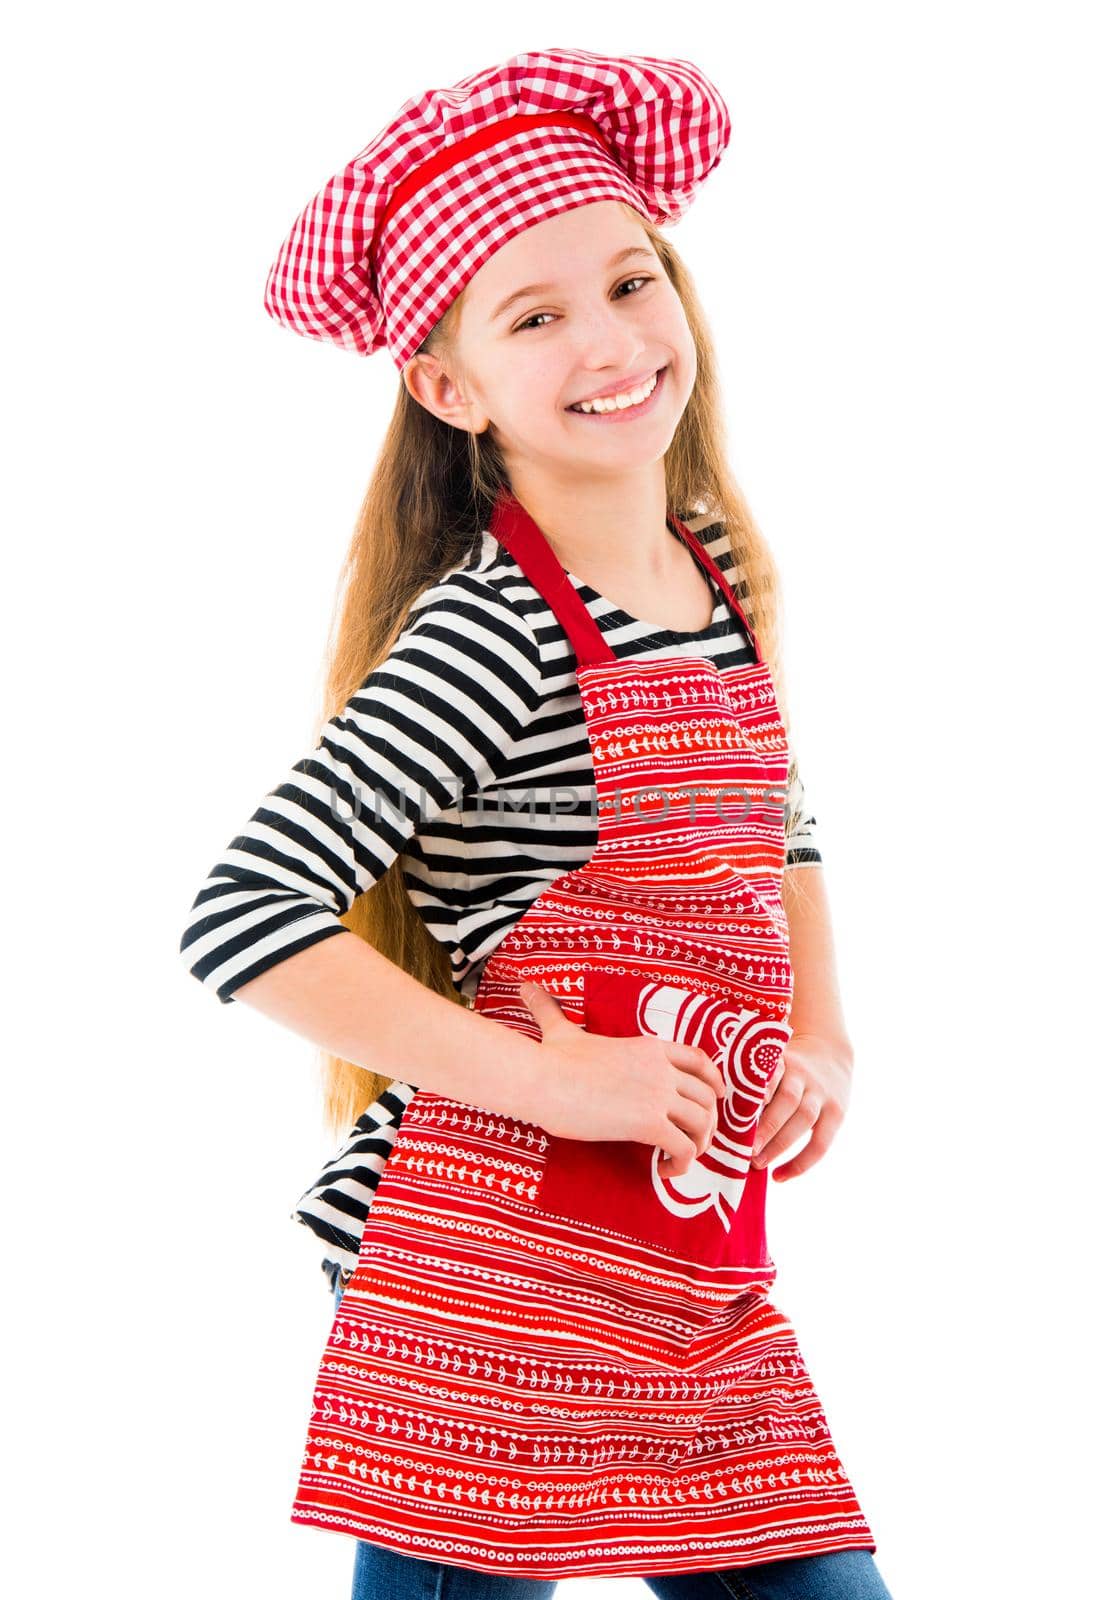 Little girl in red chef uniform smiles by GekaSkr